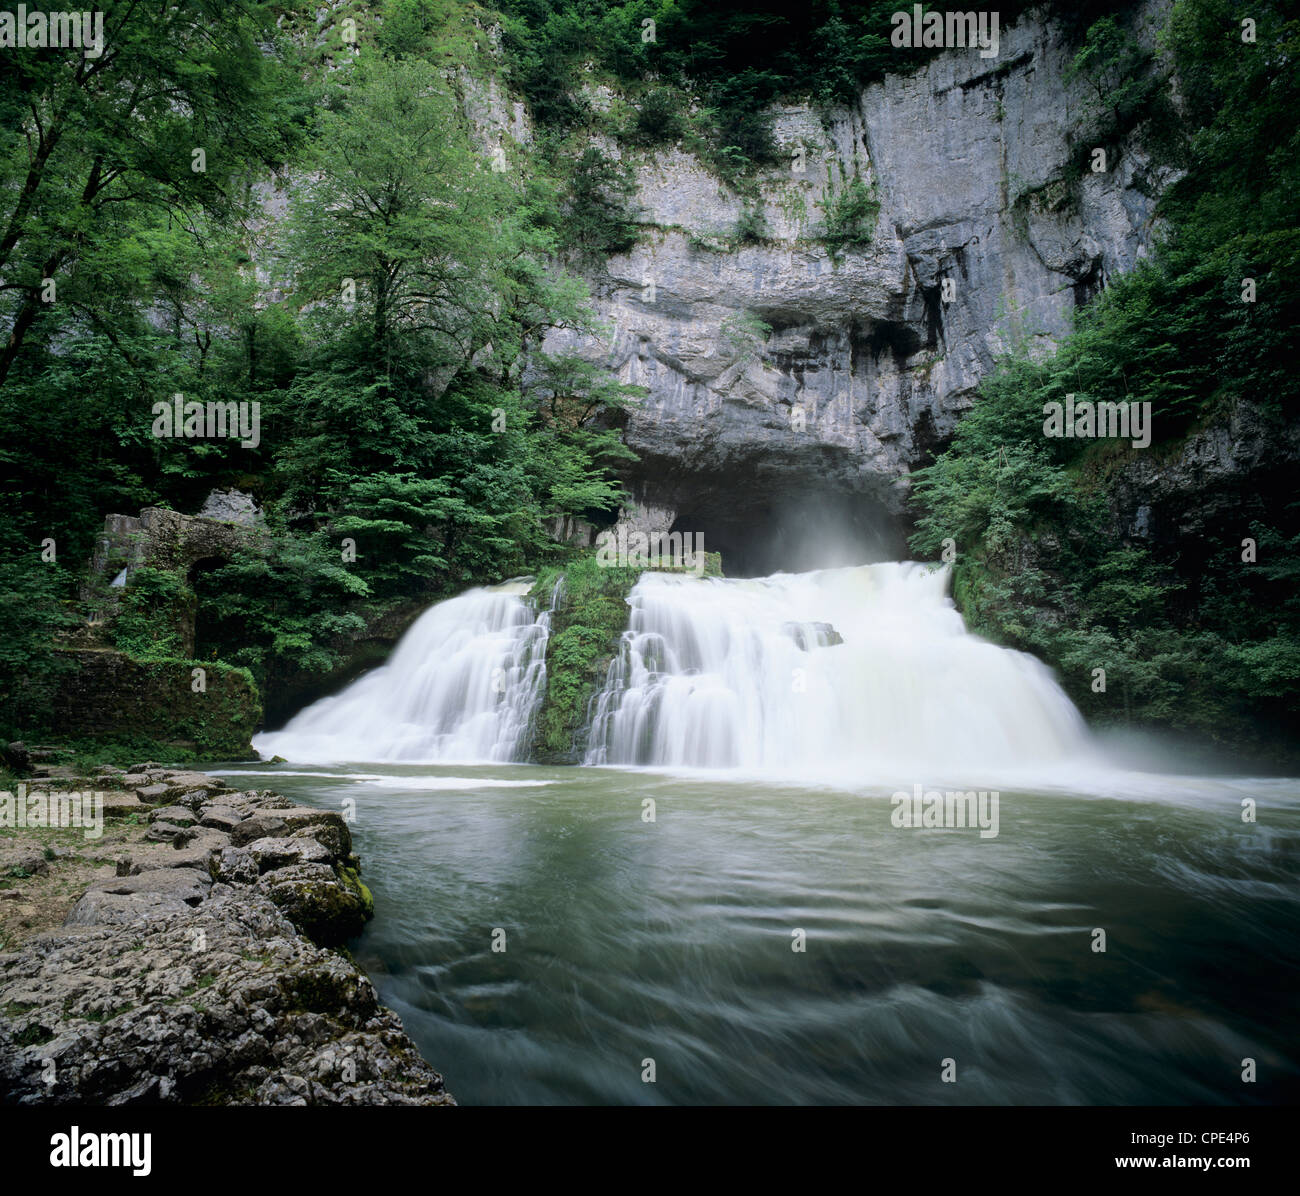 Wasserfall des Flusses Lison entstehen aus dem Untergrund, Source du Lison, Nans Sous St. Anne, Jura, Franche-Comte, Frankreich, Europa Stockfoto